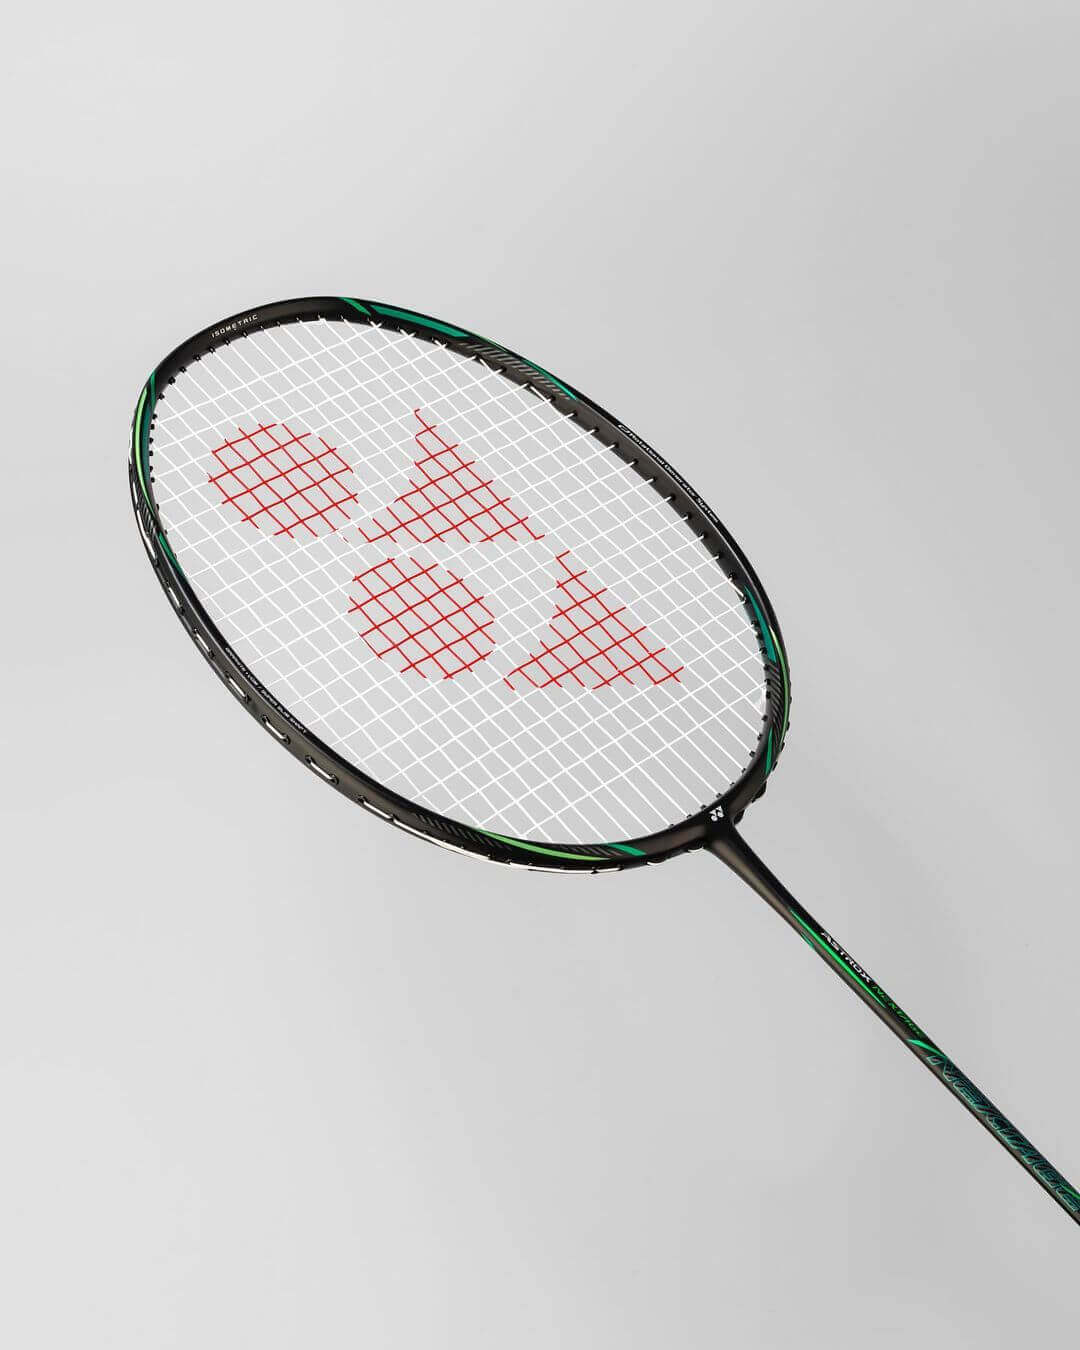 Sport Socks vs. Badminton Socks – Yumo Pro Shop - Racquet Sports